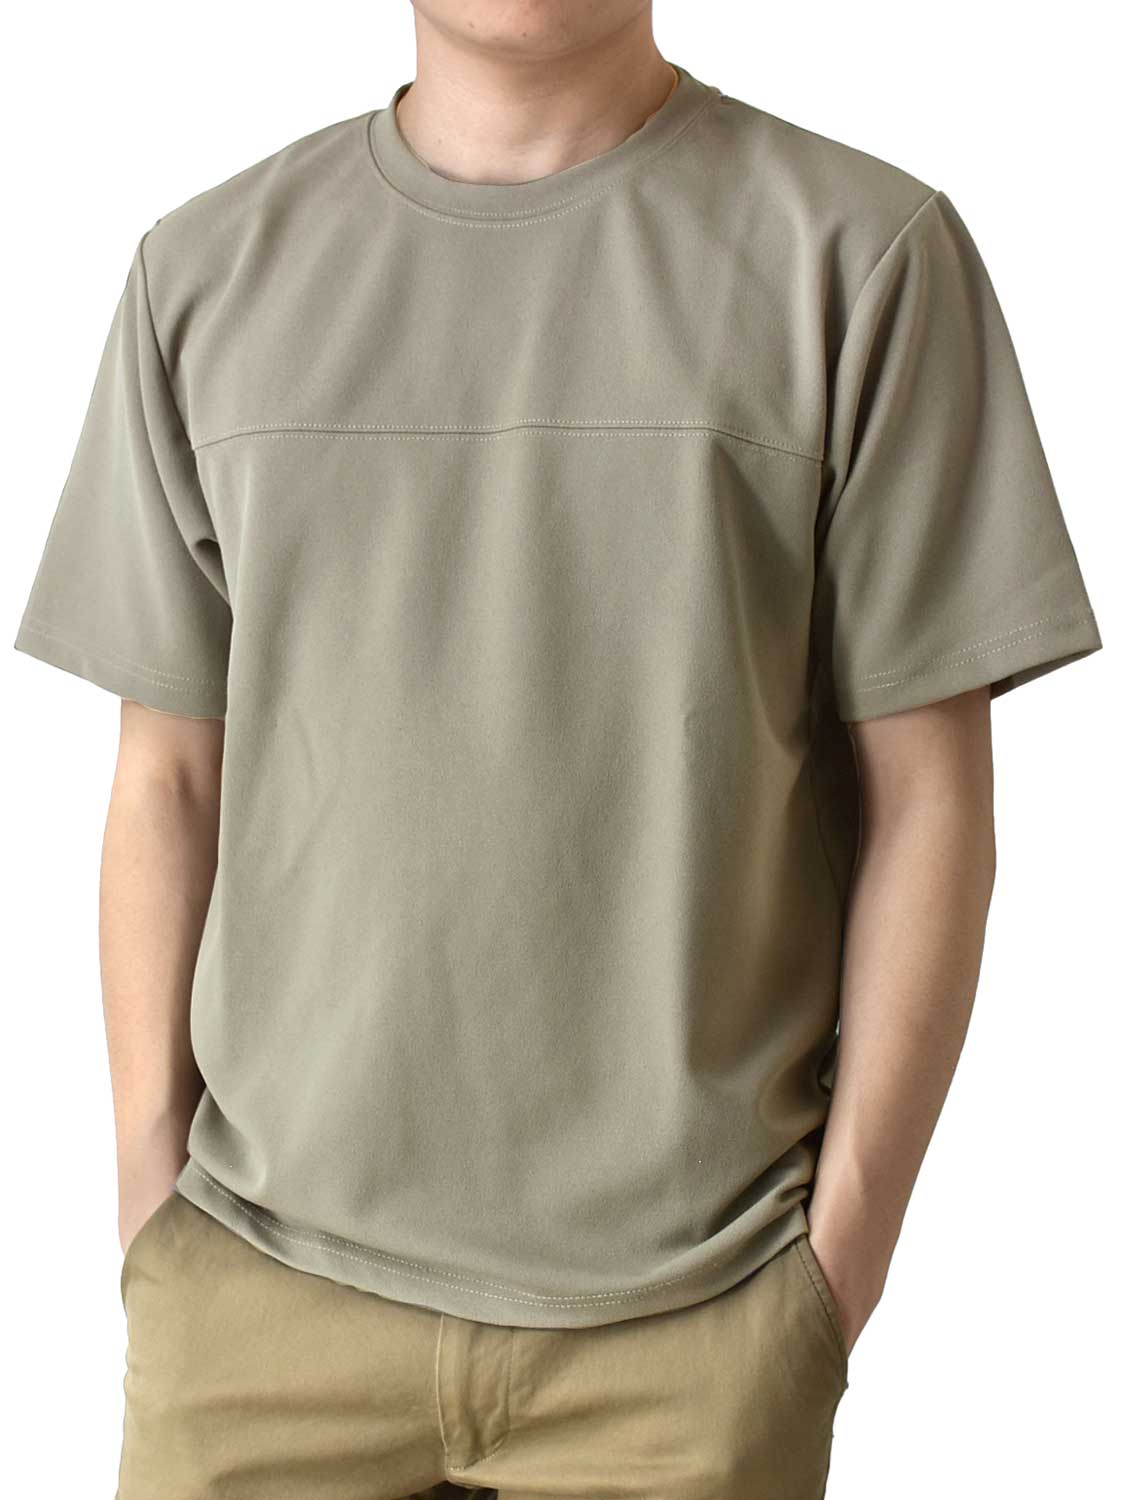 Tシャツ 接触冷感 メンズ DRYストレッチ 速乾 UVカット くすみカラー 送料無料 通販Y 半袖